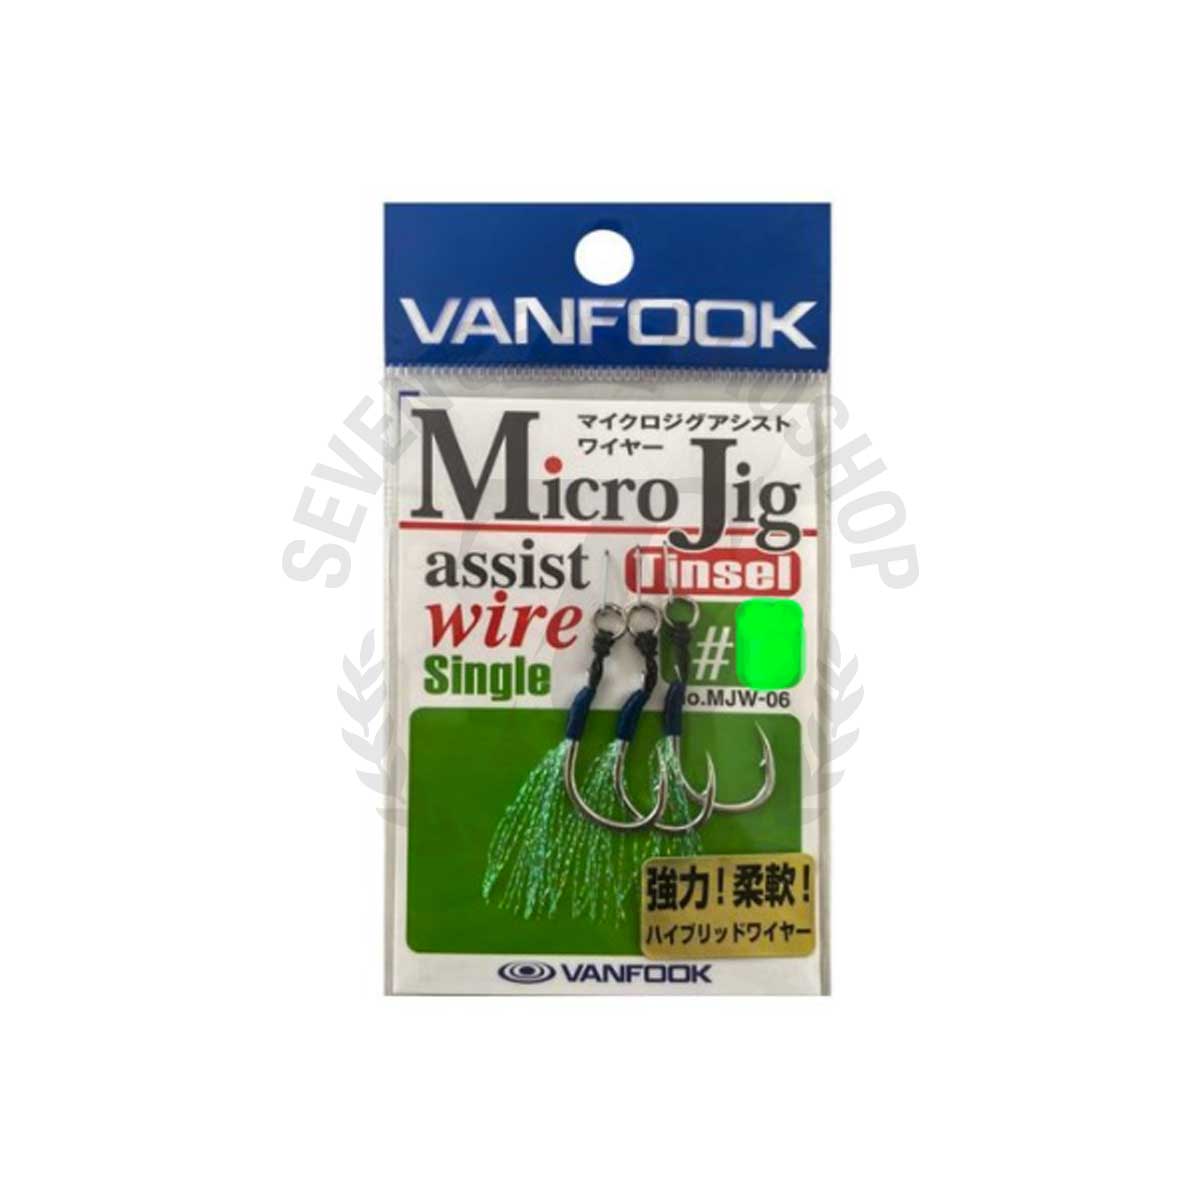 Vanfook Micro Jig Assist Single MJW-06 #1*มีลวด - 7 SEAS PROSHOP (THAILAND)